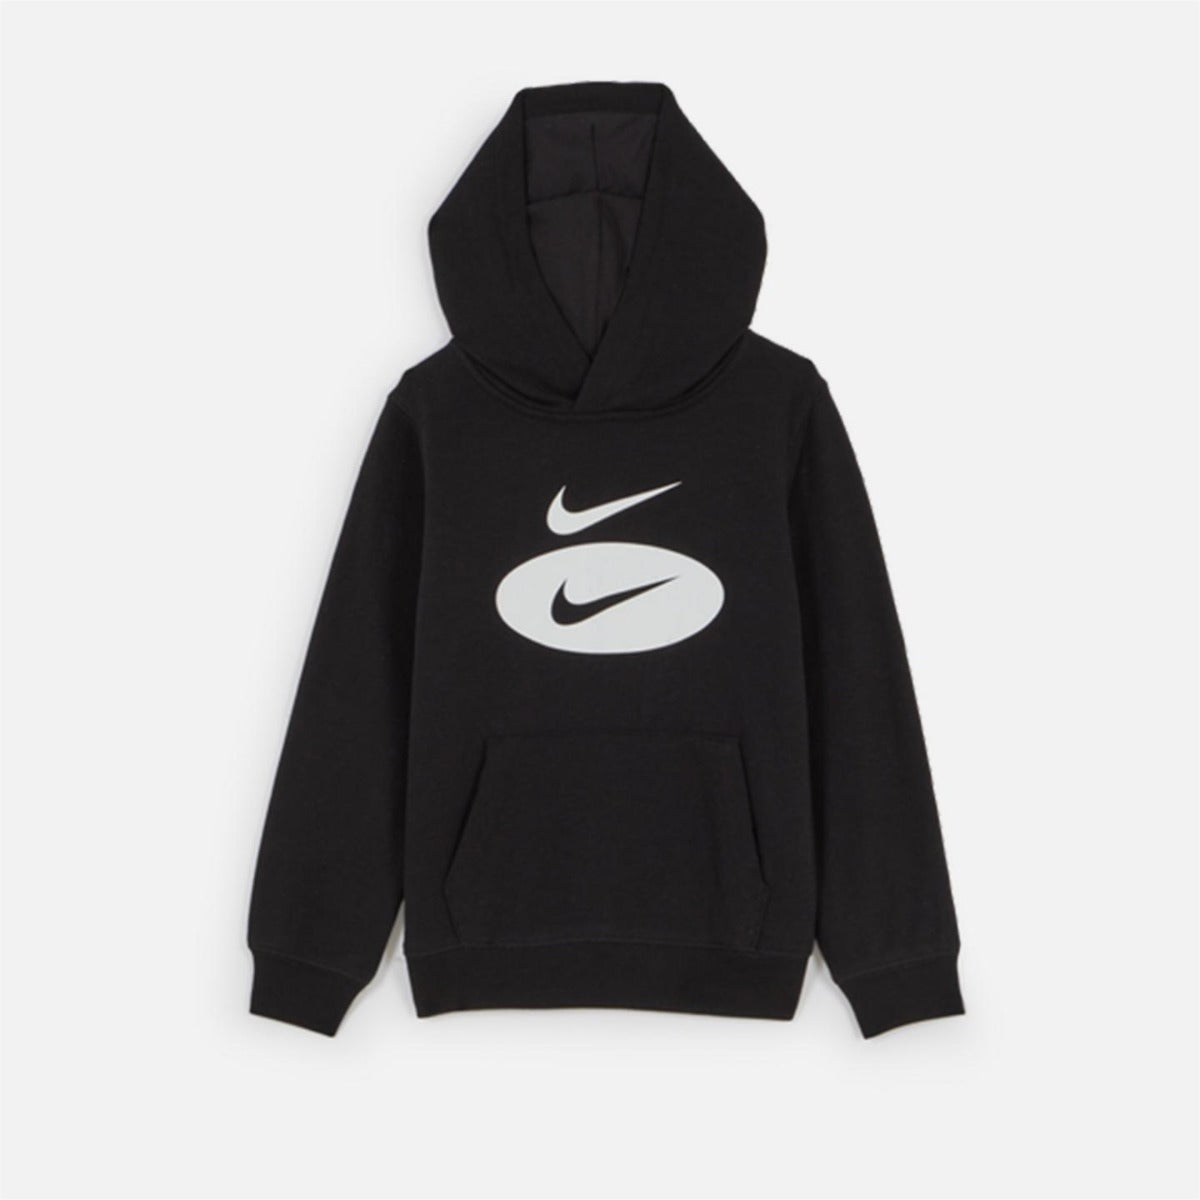 Nike Sportswear Kinder-Sweatshirt – Schwarz/Weiß